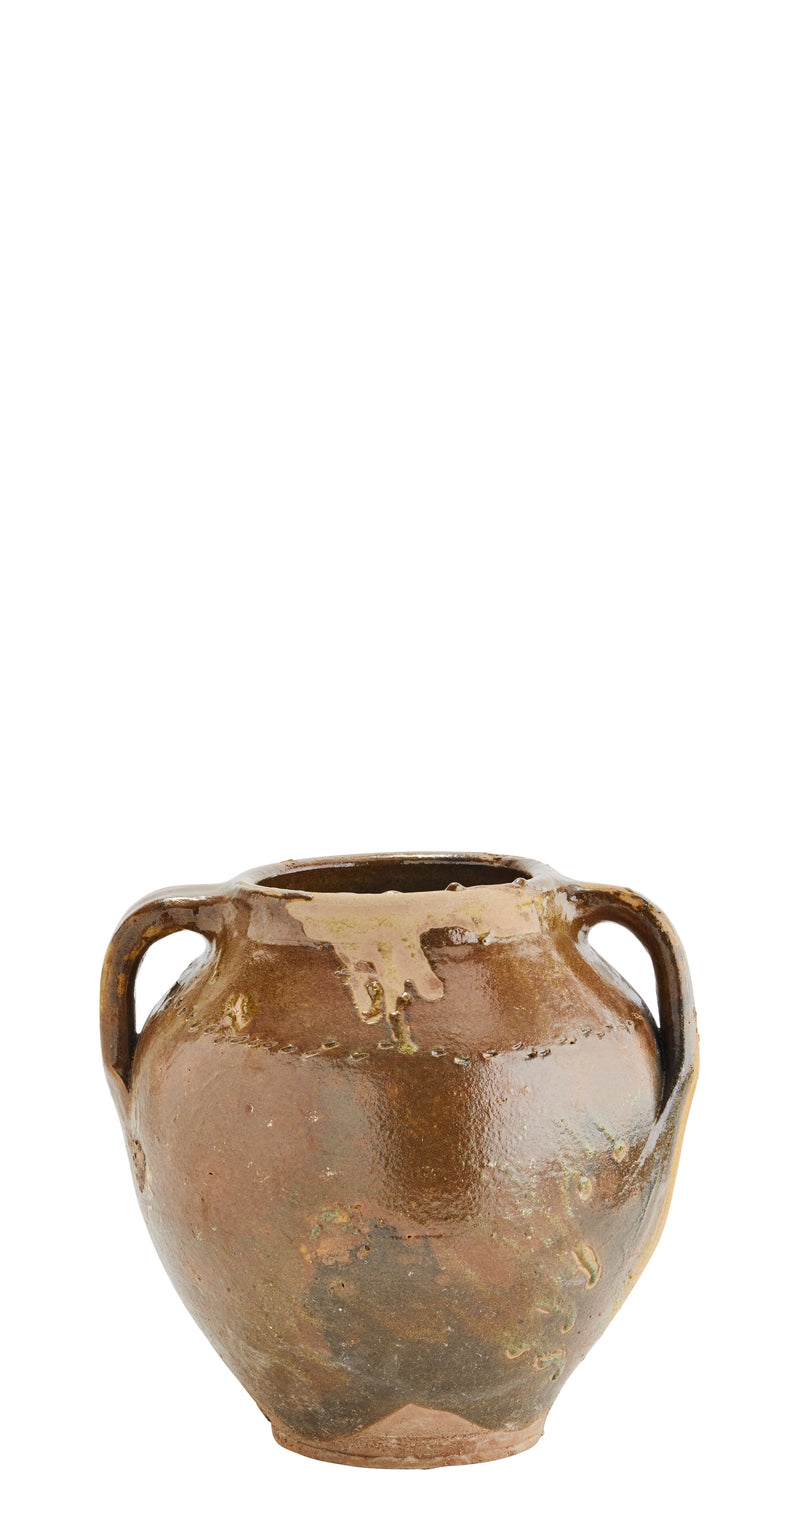 Vintage stoneware vessel with handles